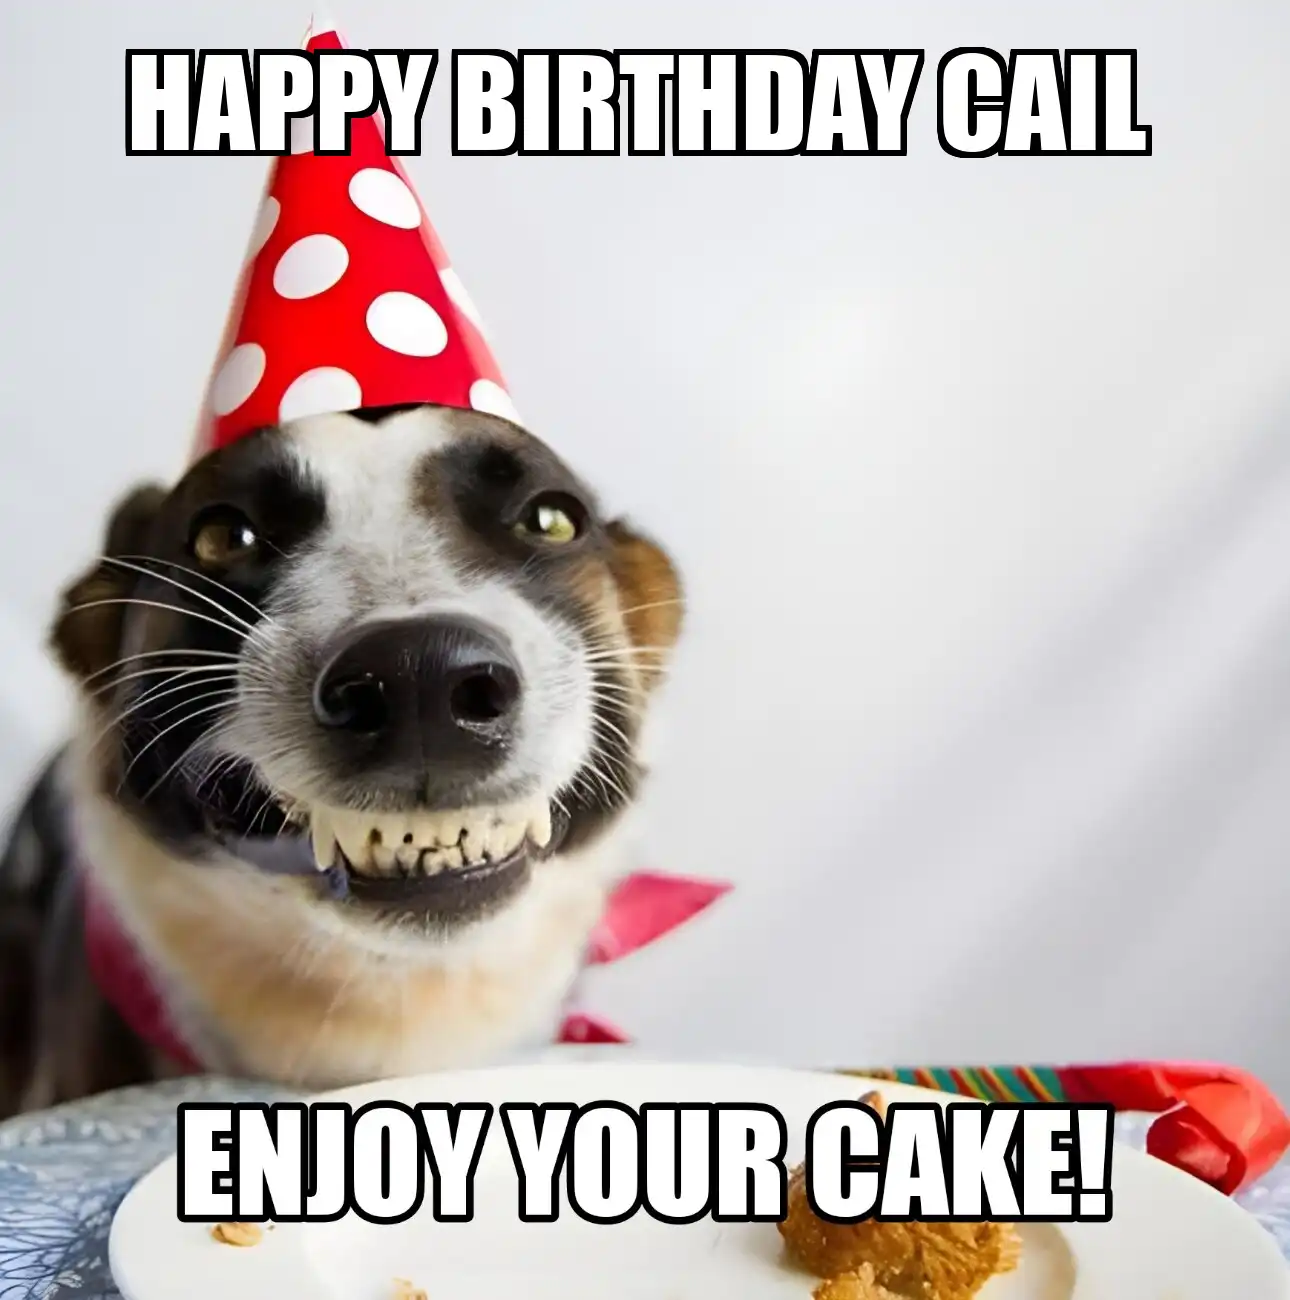 Happy Birthday Cail Enjoy Your Cake Dog Meme